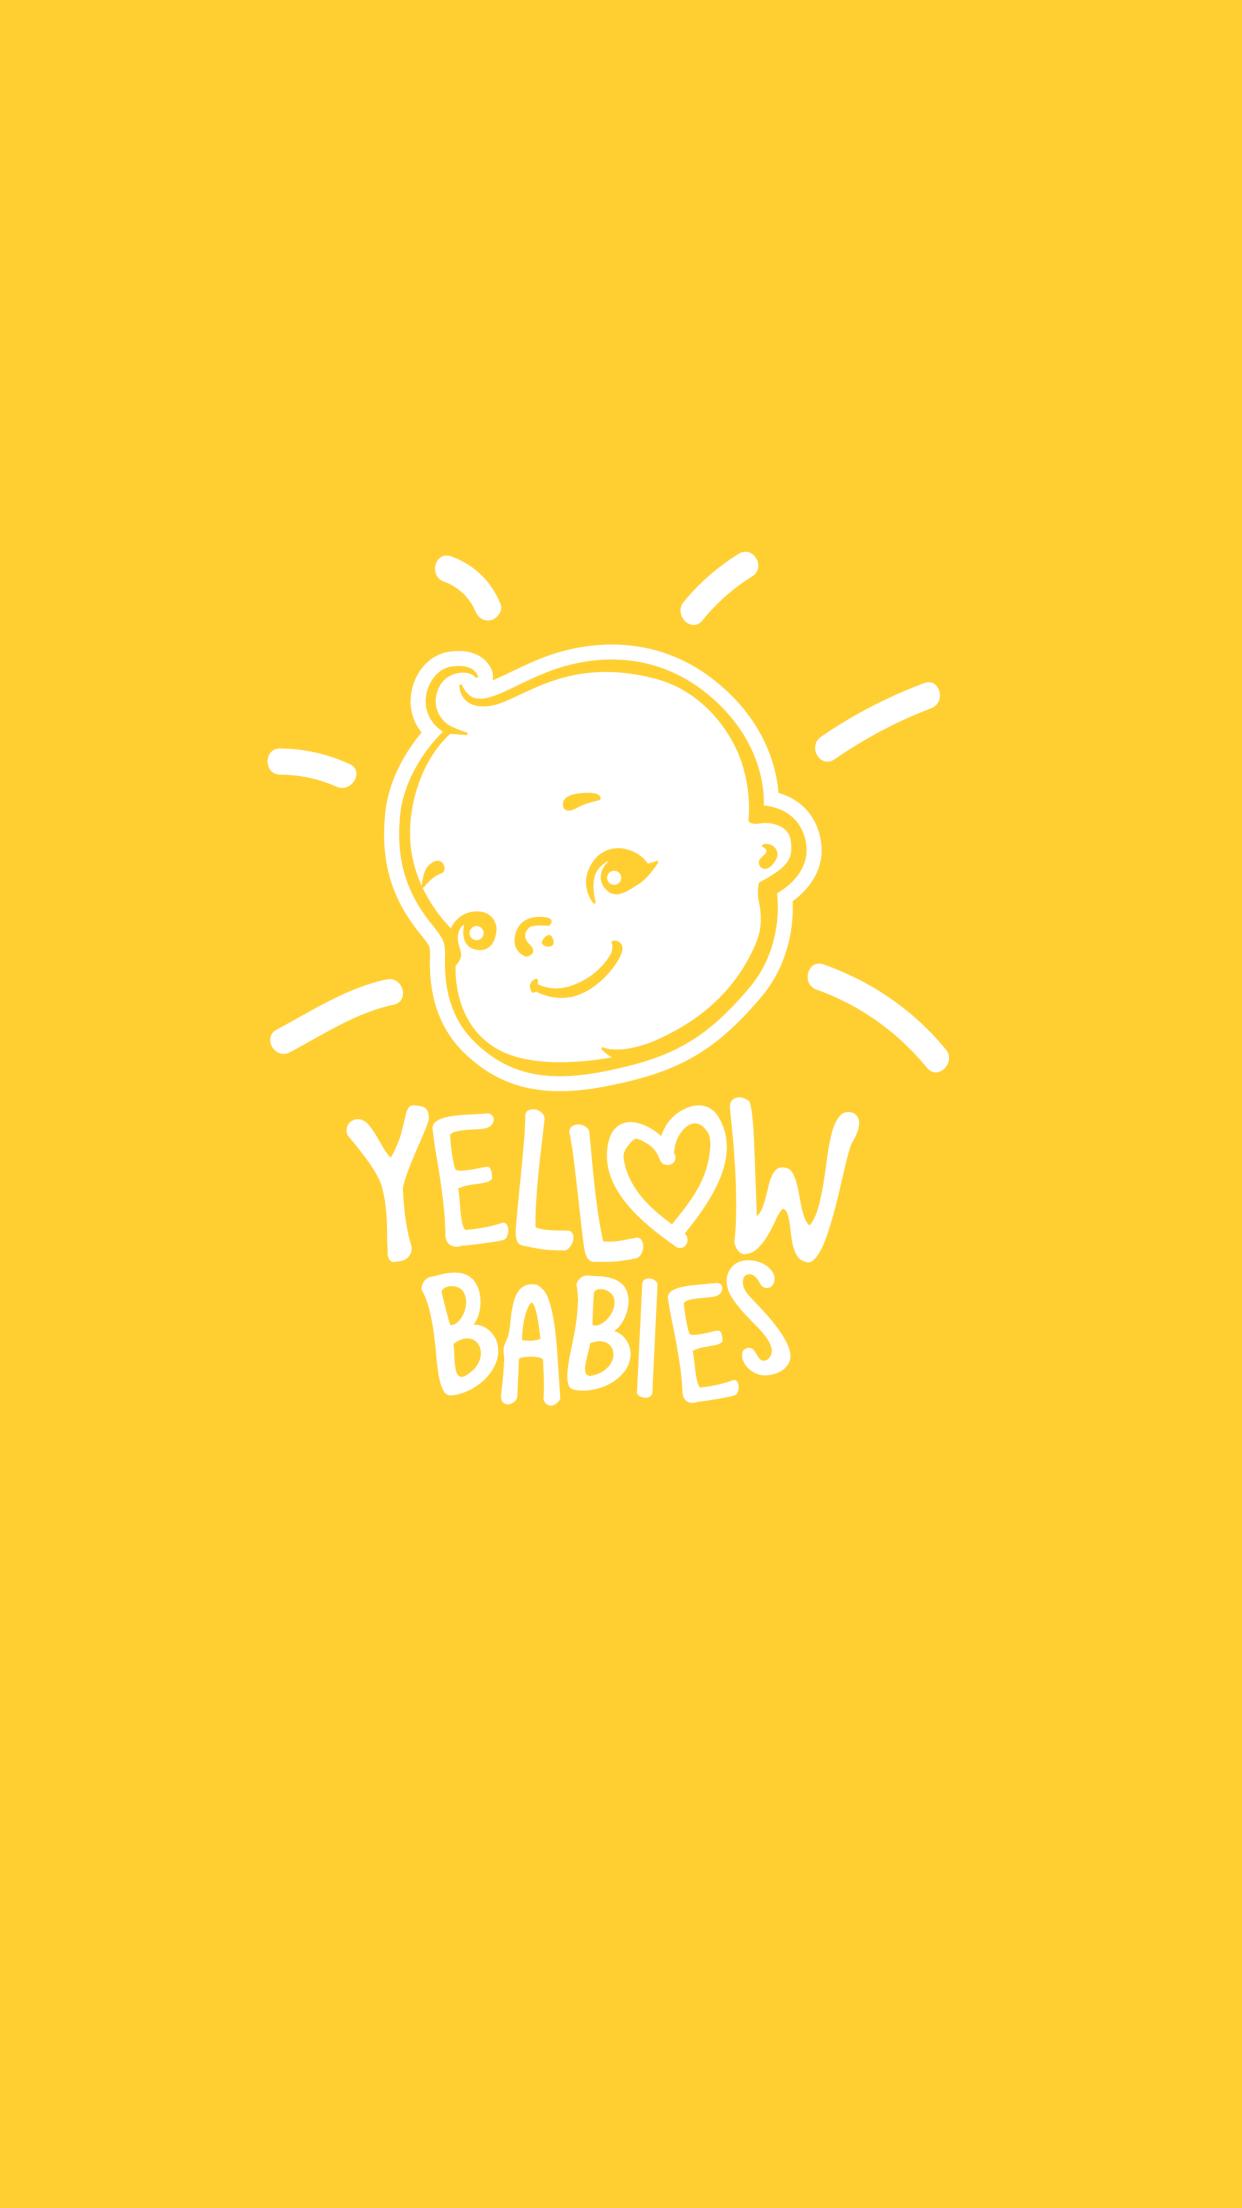 Baby and yellow. Бейби Елоу. The Baby in Yellow обои. The Baby in Yellow обложка. Baby in Yellow фон кухня.